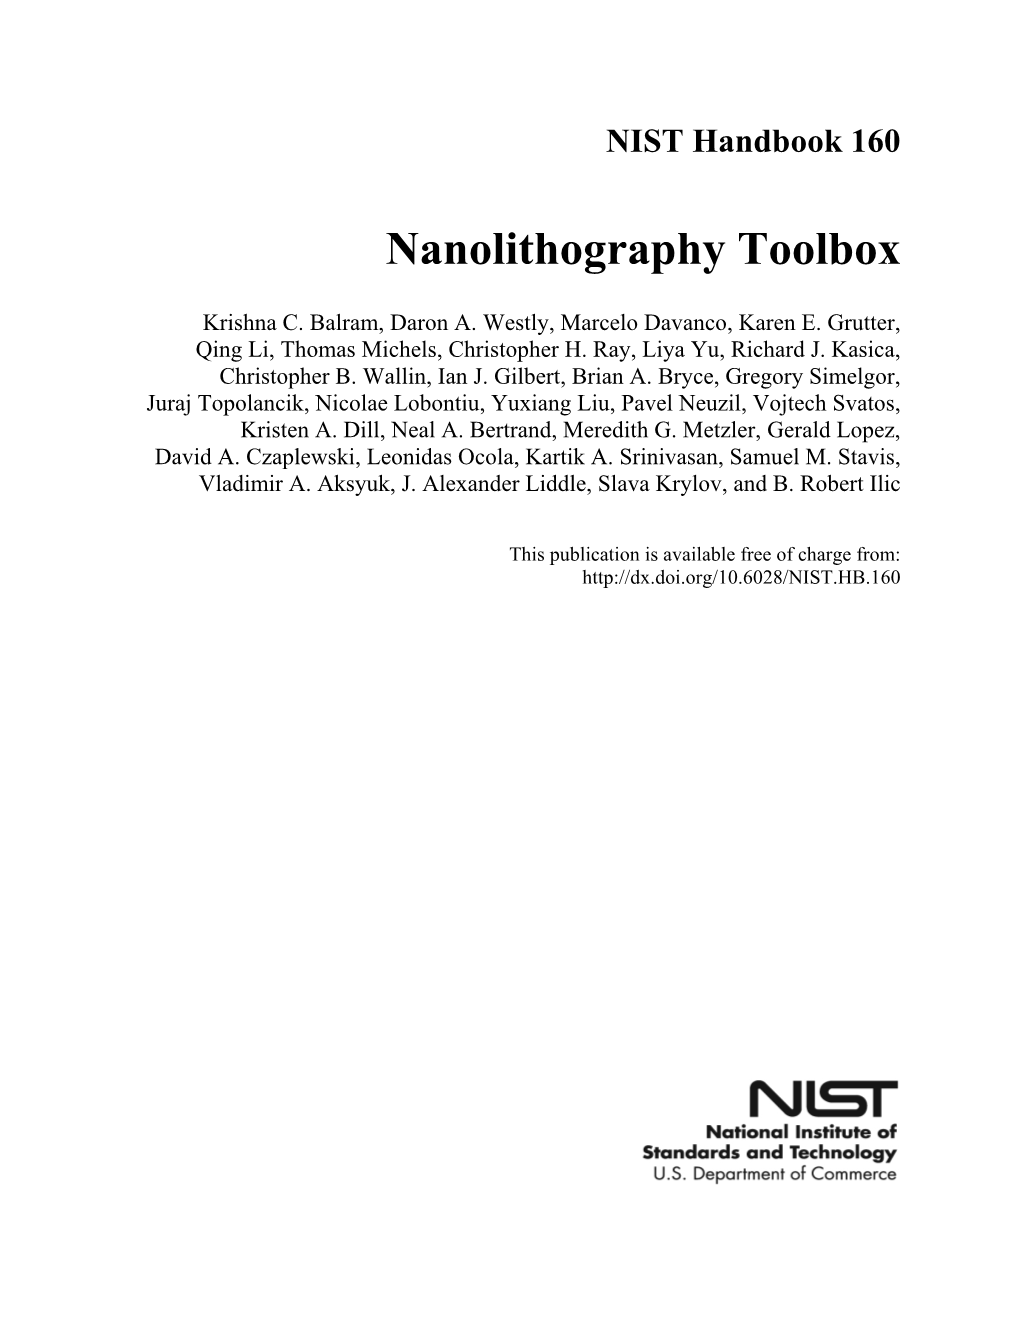 Nanolithography Toolbox